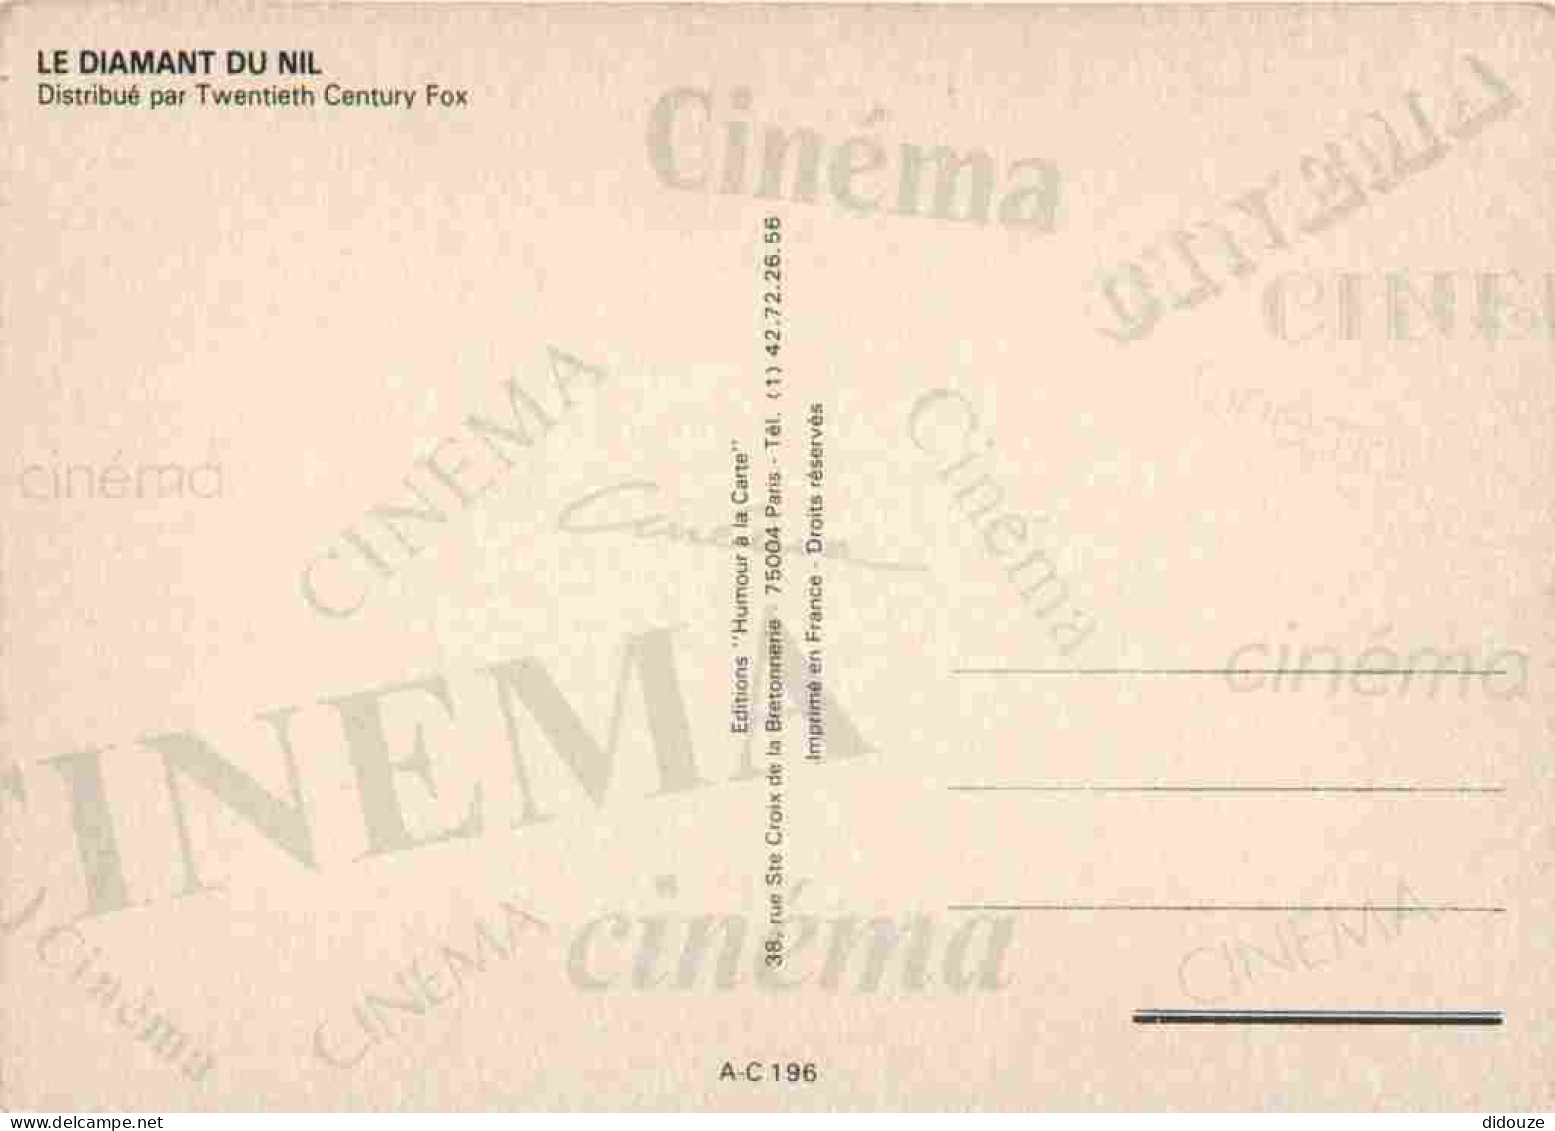 Cinema - Affiche De Film - Le Diamant Du Nil - Michael Douglas - Kathleen Turner - Danny DeVito - CPM - Carte Neuve - Vo - Manifesti Su Carta